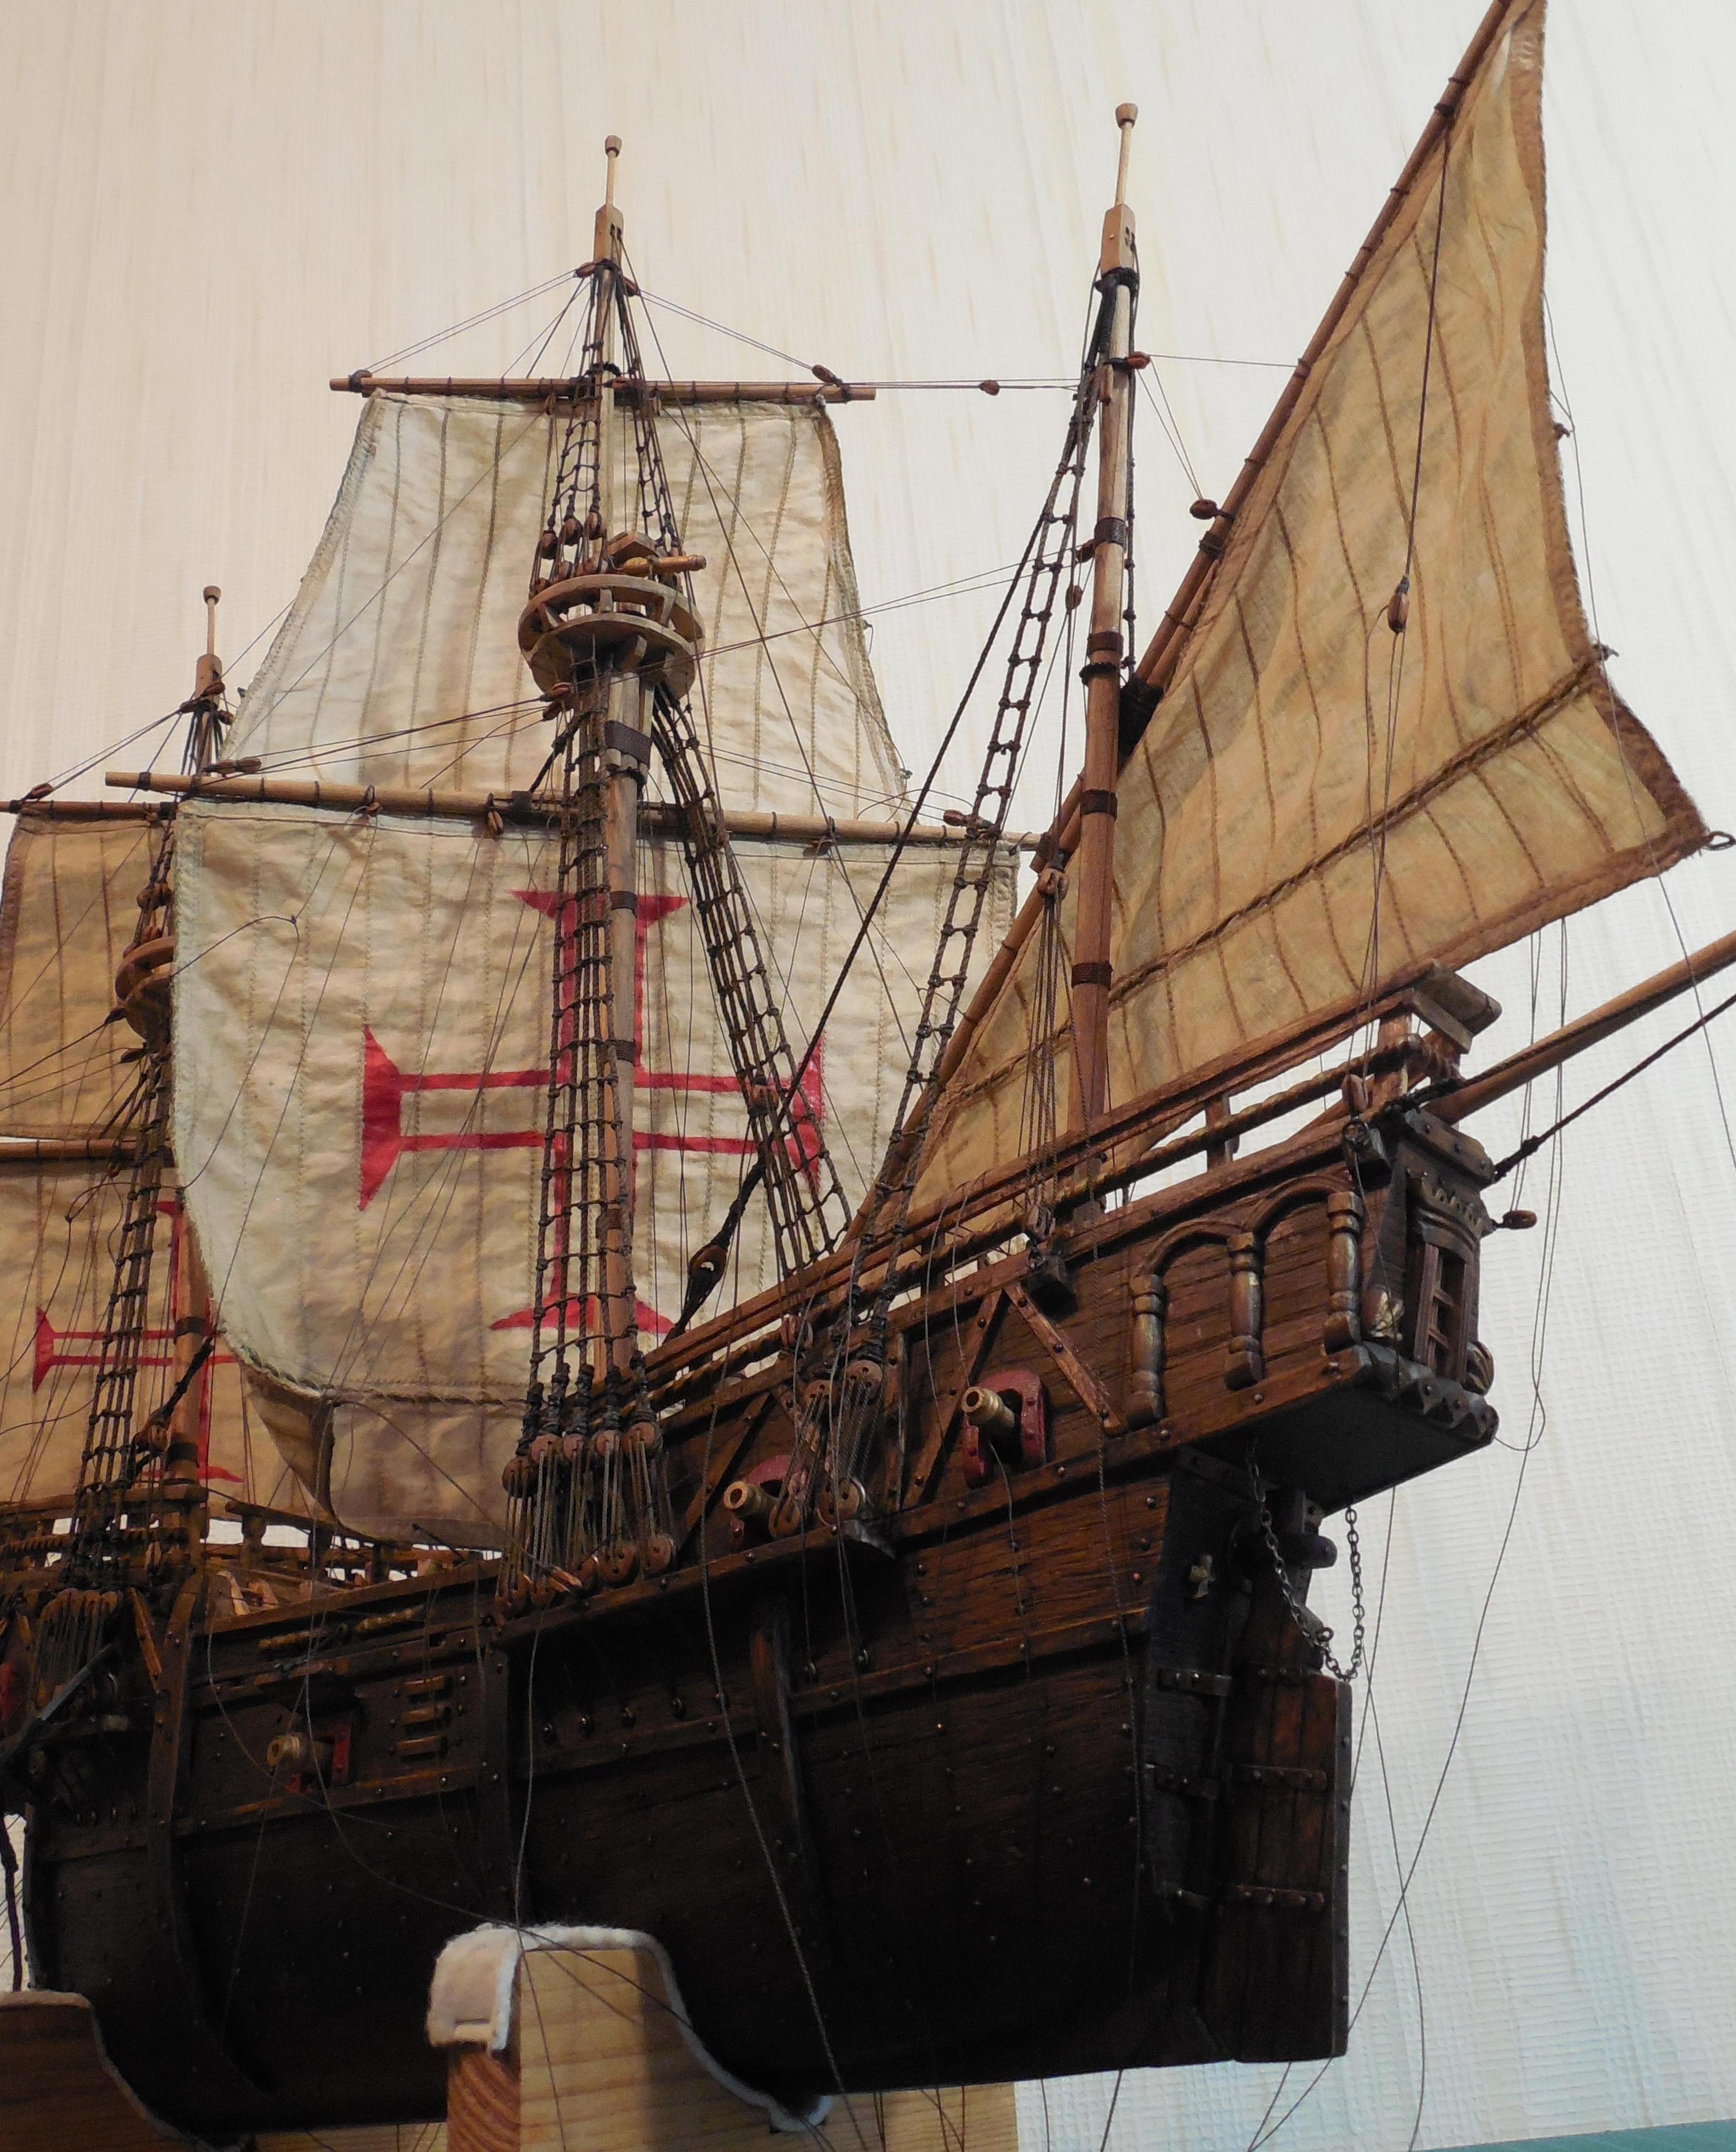 Судно от 15. Каракка 16 века. Парусный Галеон 15 века. Венецианская каракка. Парусные корабли 16 века.